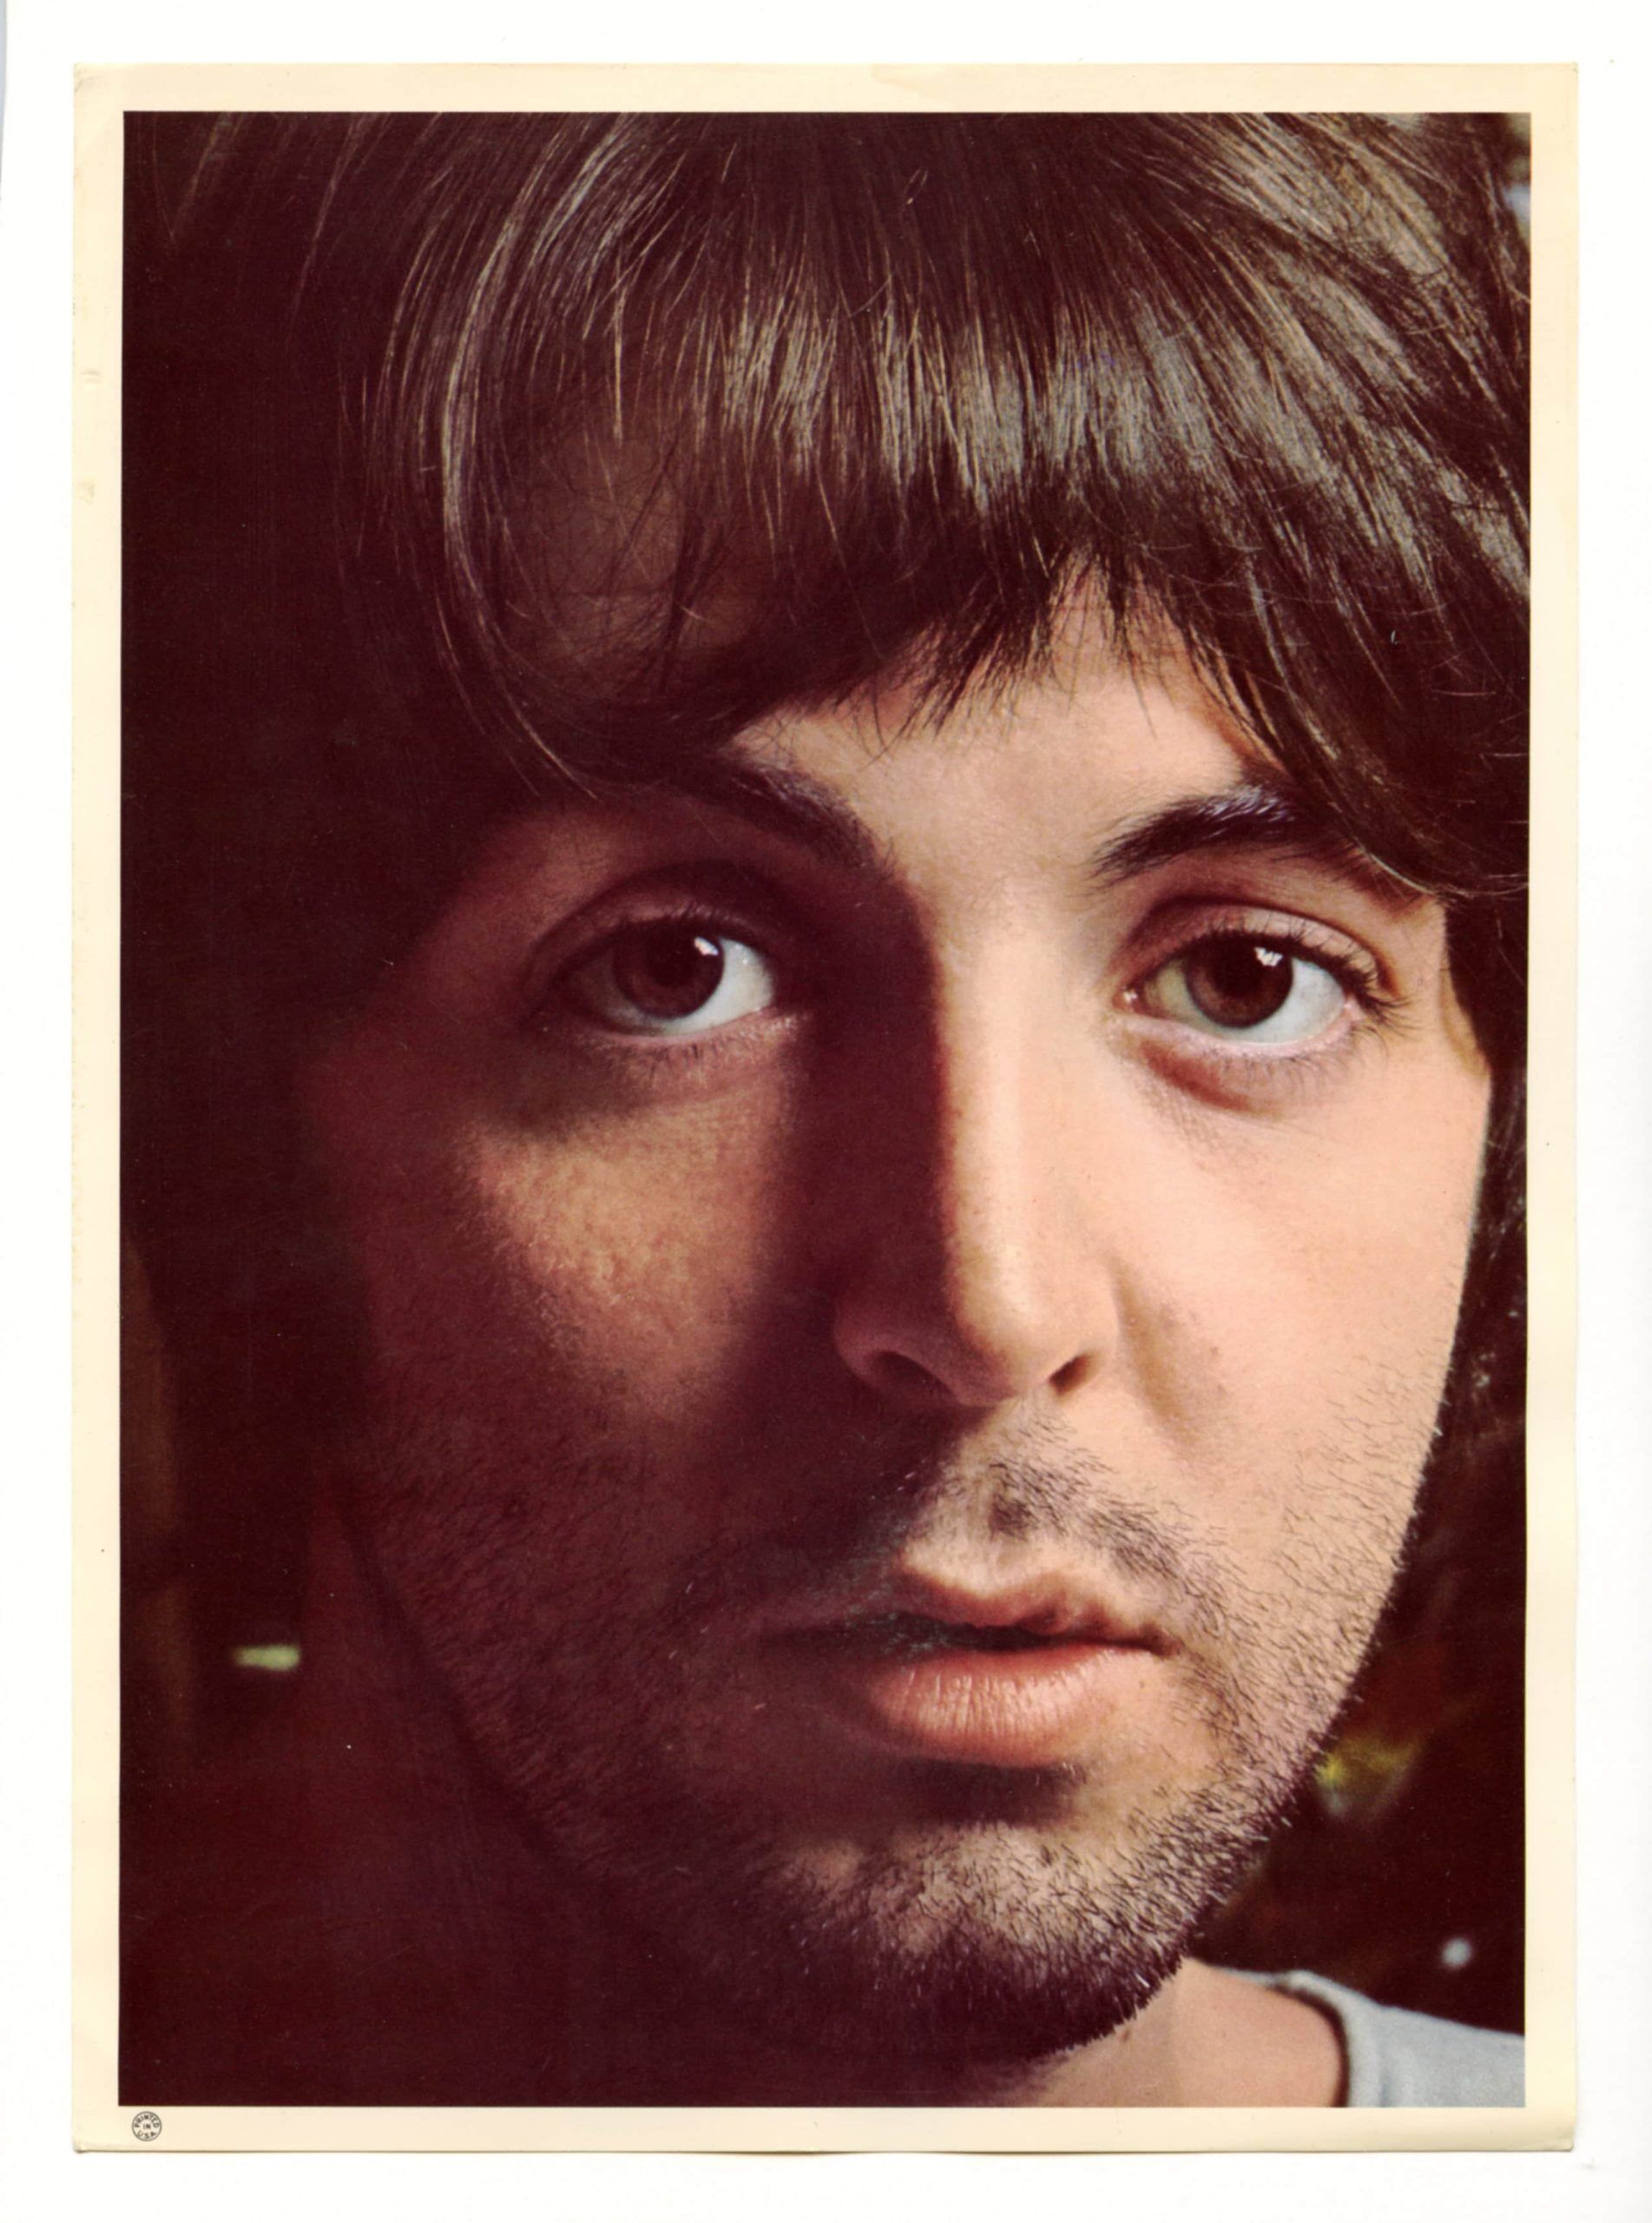 The Beatles Photo 1968 Portrait set of 4 John Kelly Vintage Original